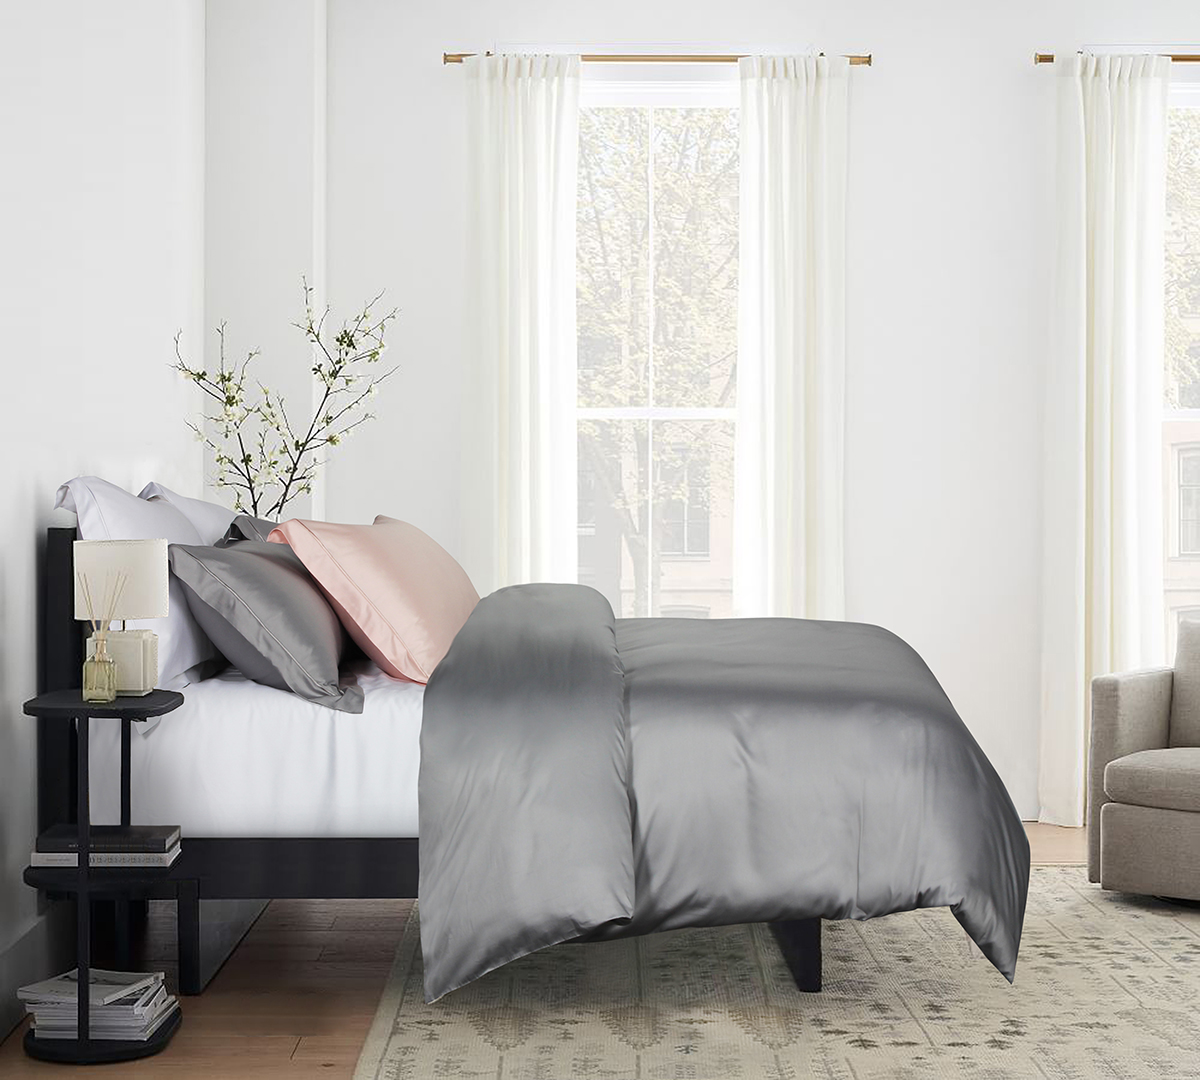 squarerooms raffles city bedding furnishings home decor shop oasis living grey pink white bedroom